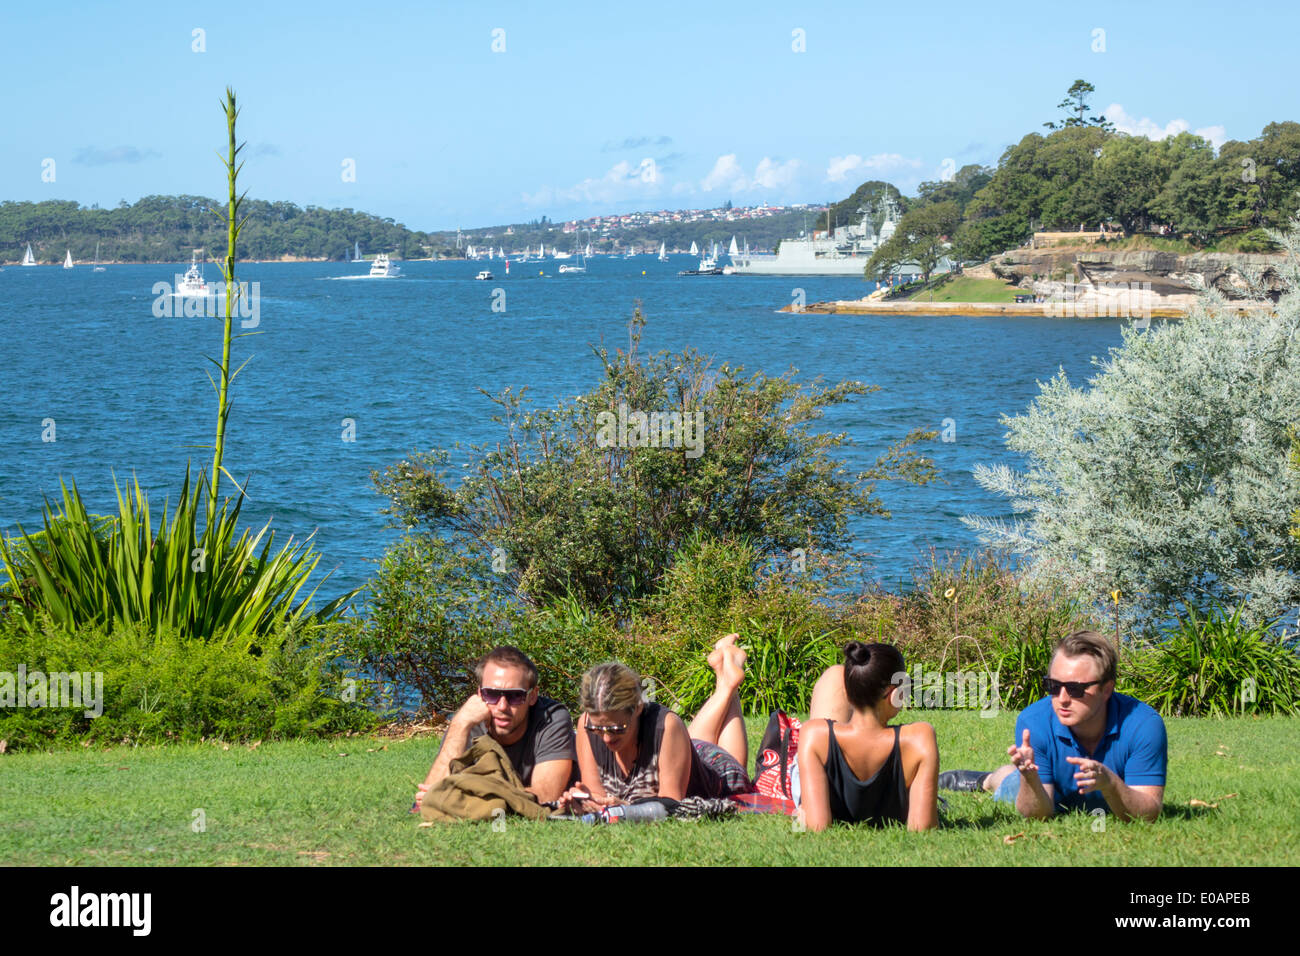 Sydney Australia, Royal Botanic Gardens, Sydney Harbour, Harbour, Parramatta River, Water, Park, AU140309112 Stockfoto